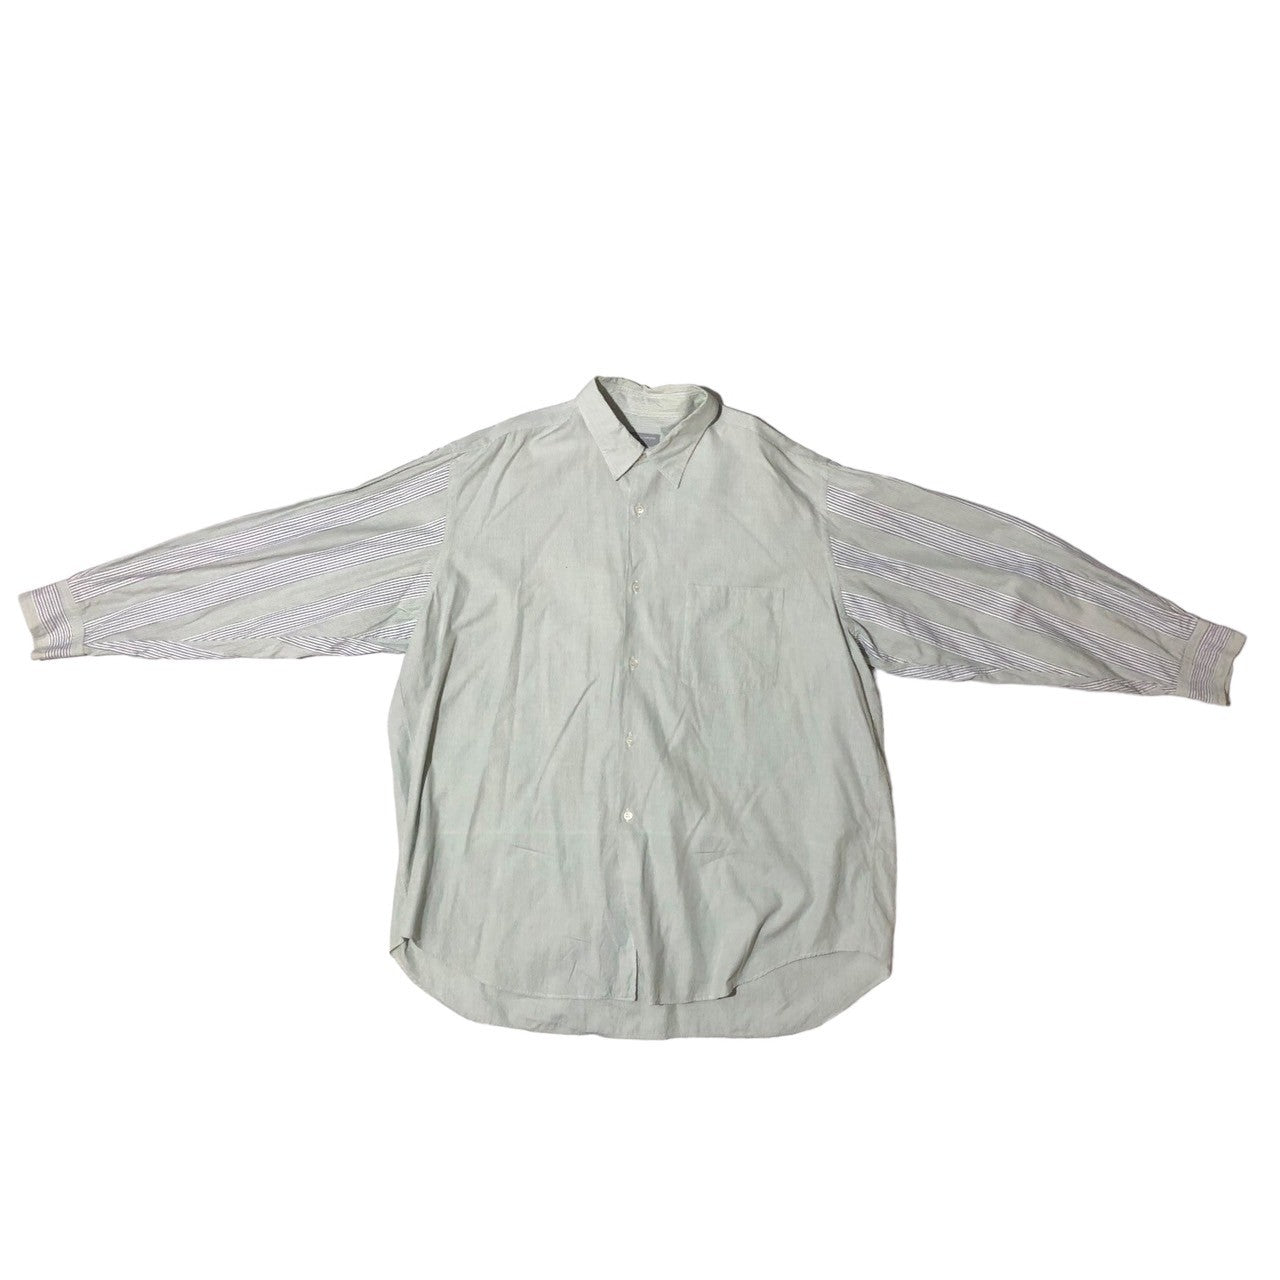 COMME des GARCONS HOMME(コムデギャルソンオム) 80's striped sleeve cotton overshirt ストライプ スリーブ コットン オーバー シャツ 川久保玲 本人期 80年代 HB-100370 SIZE表記なし(FREE) グリーン×ブルー AD1986